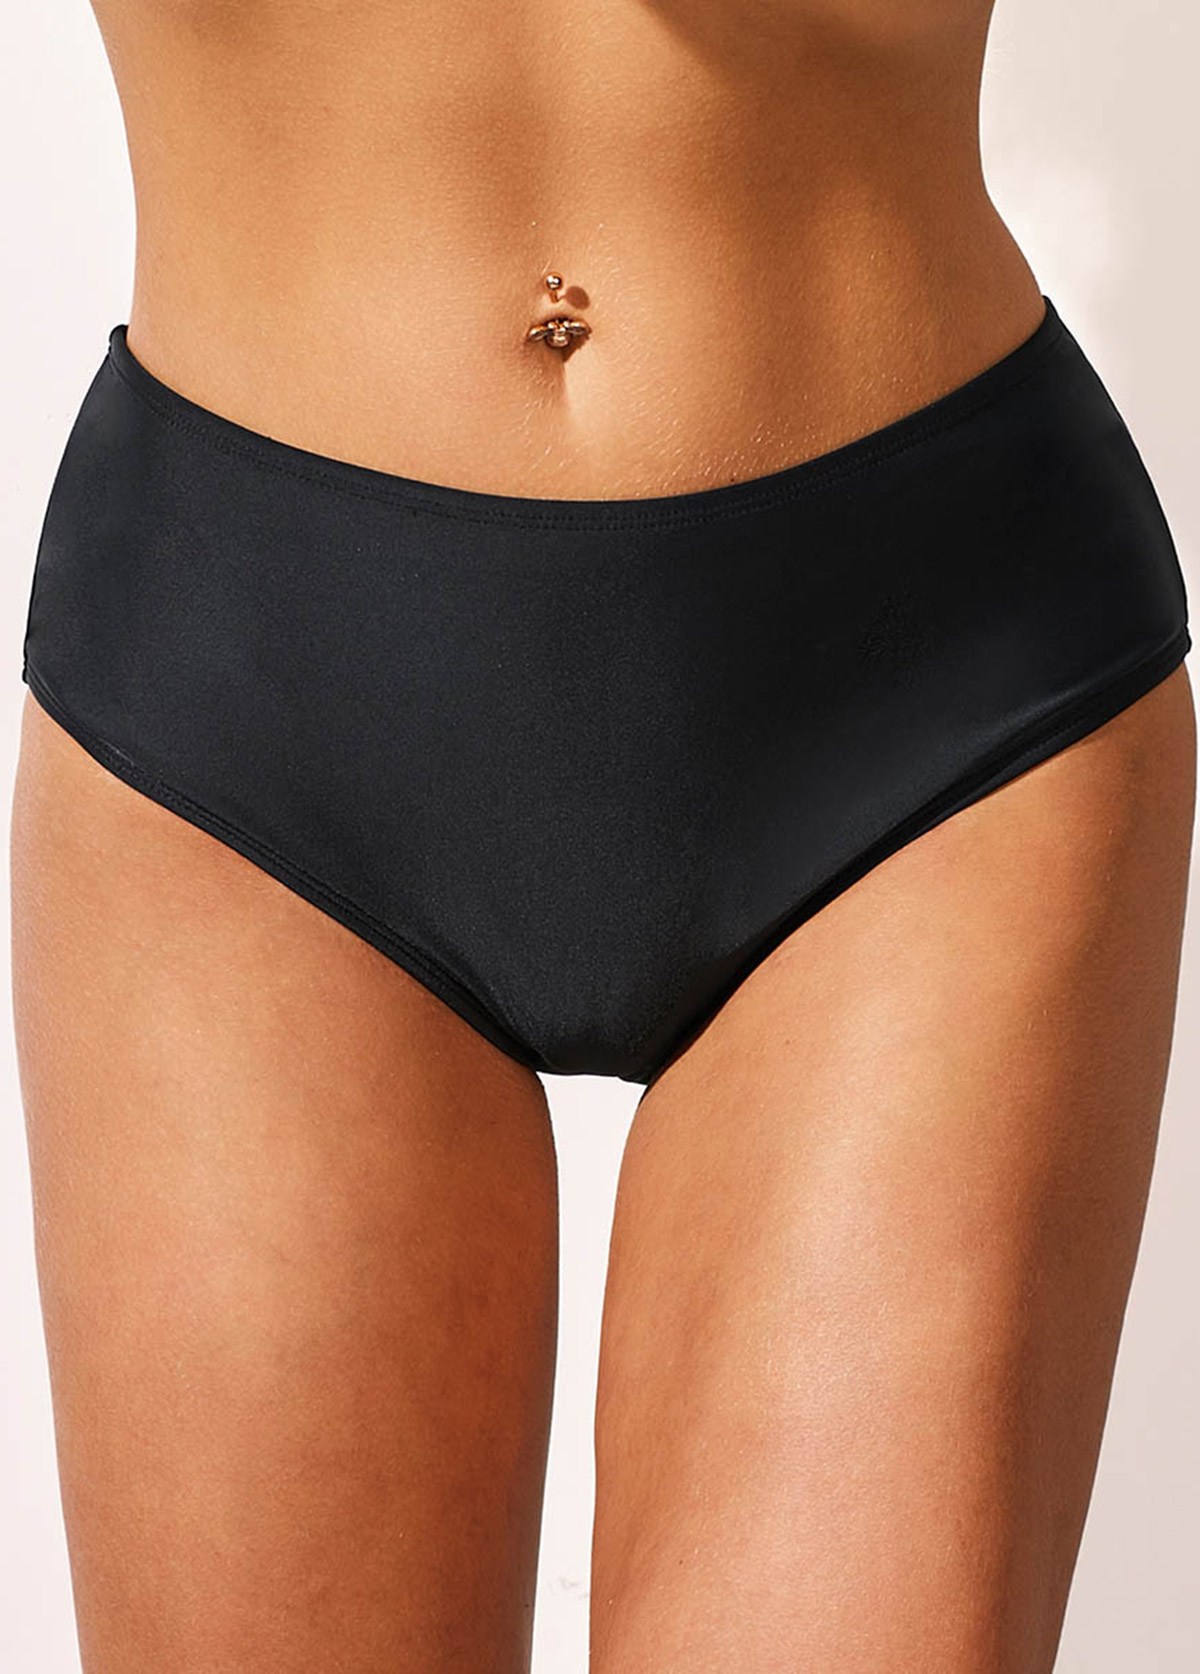 Mid waist Black Carry Buttock Swimwear Panty